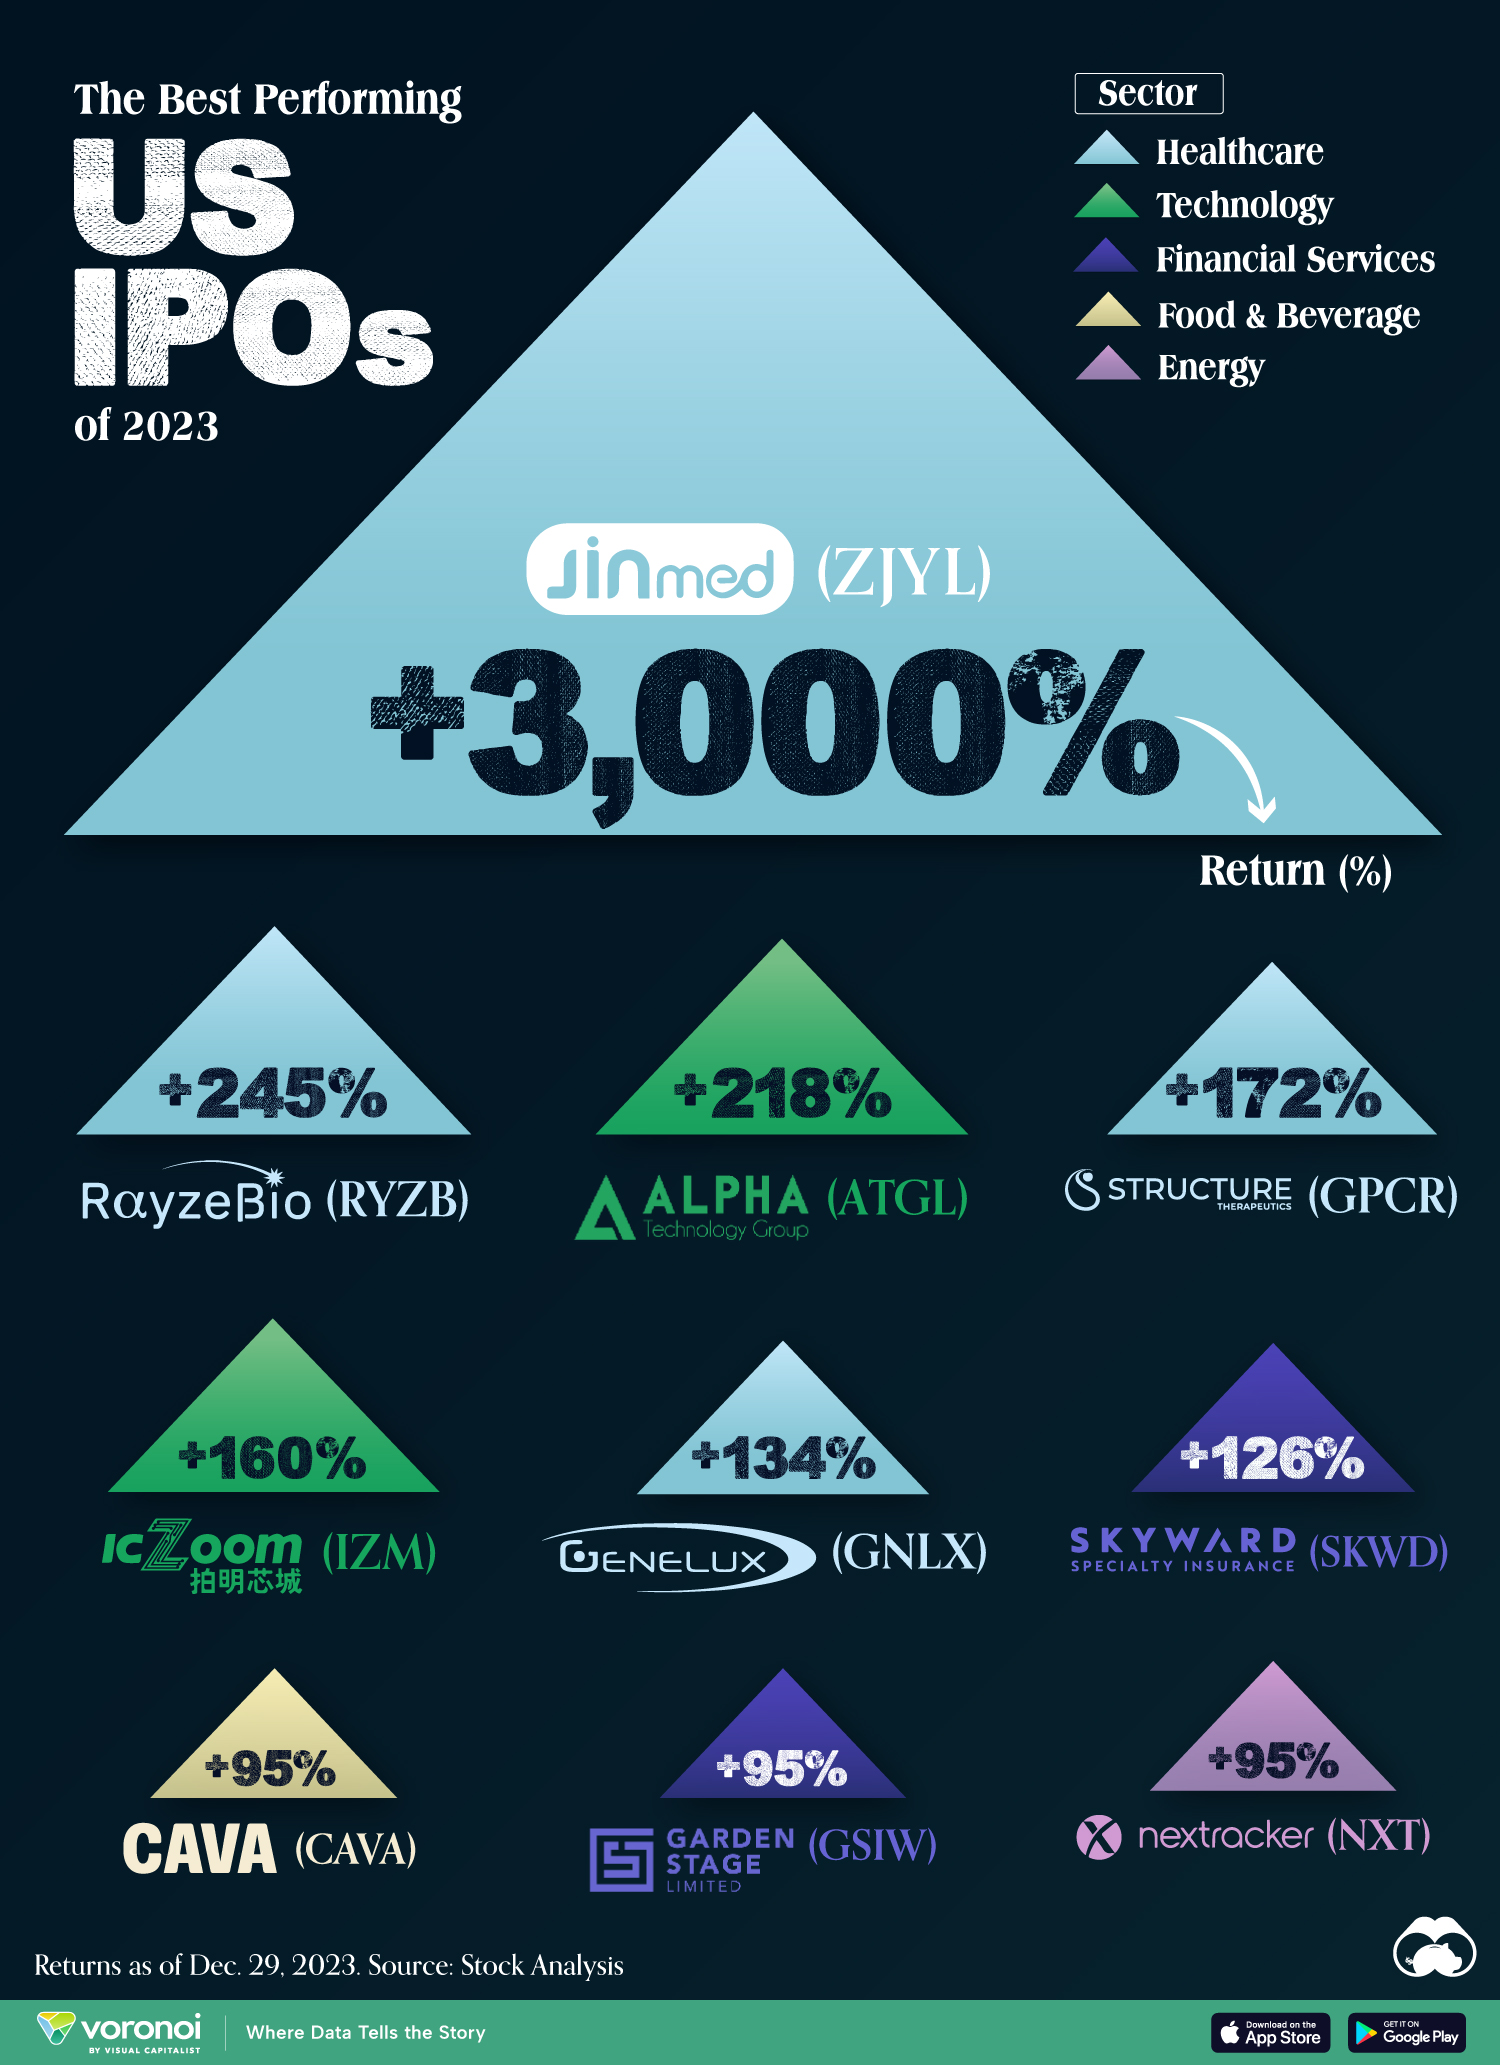 The Best Performing U.S. IPOs of 2023